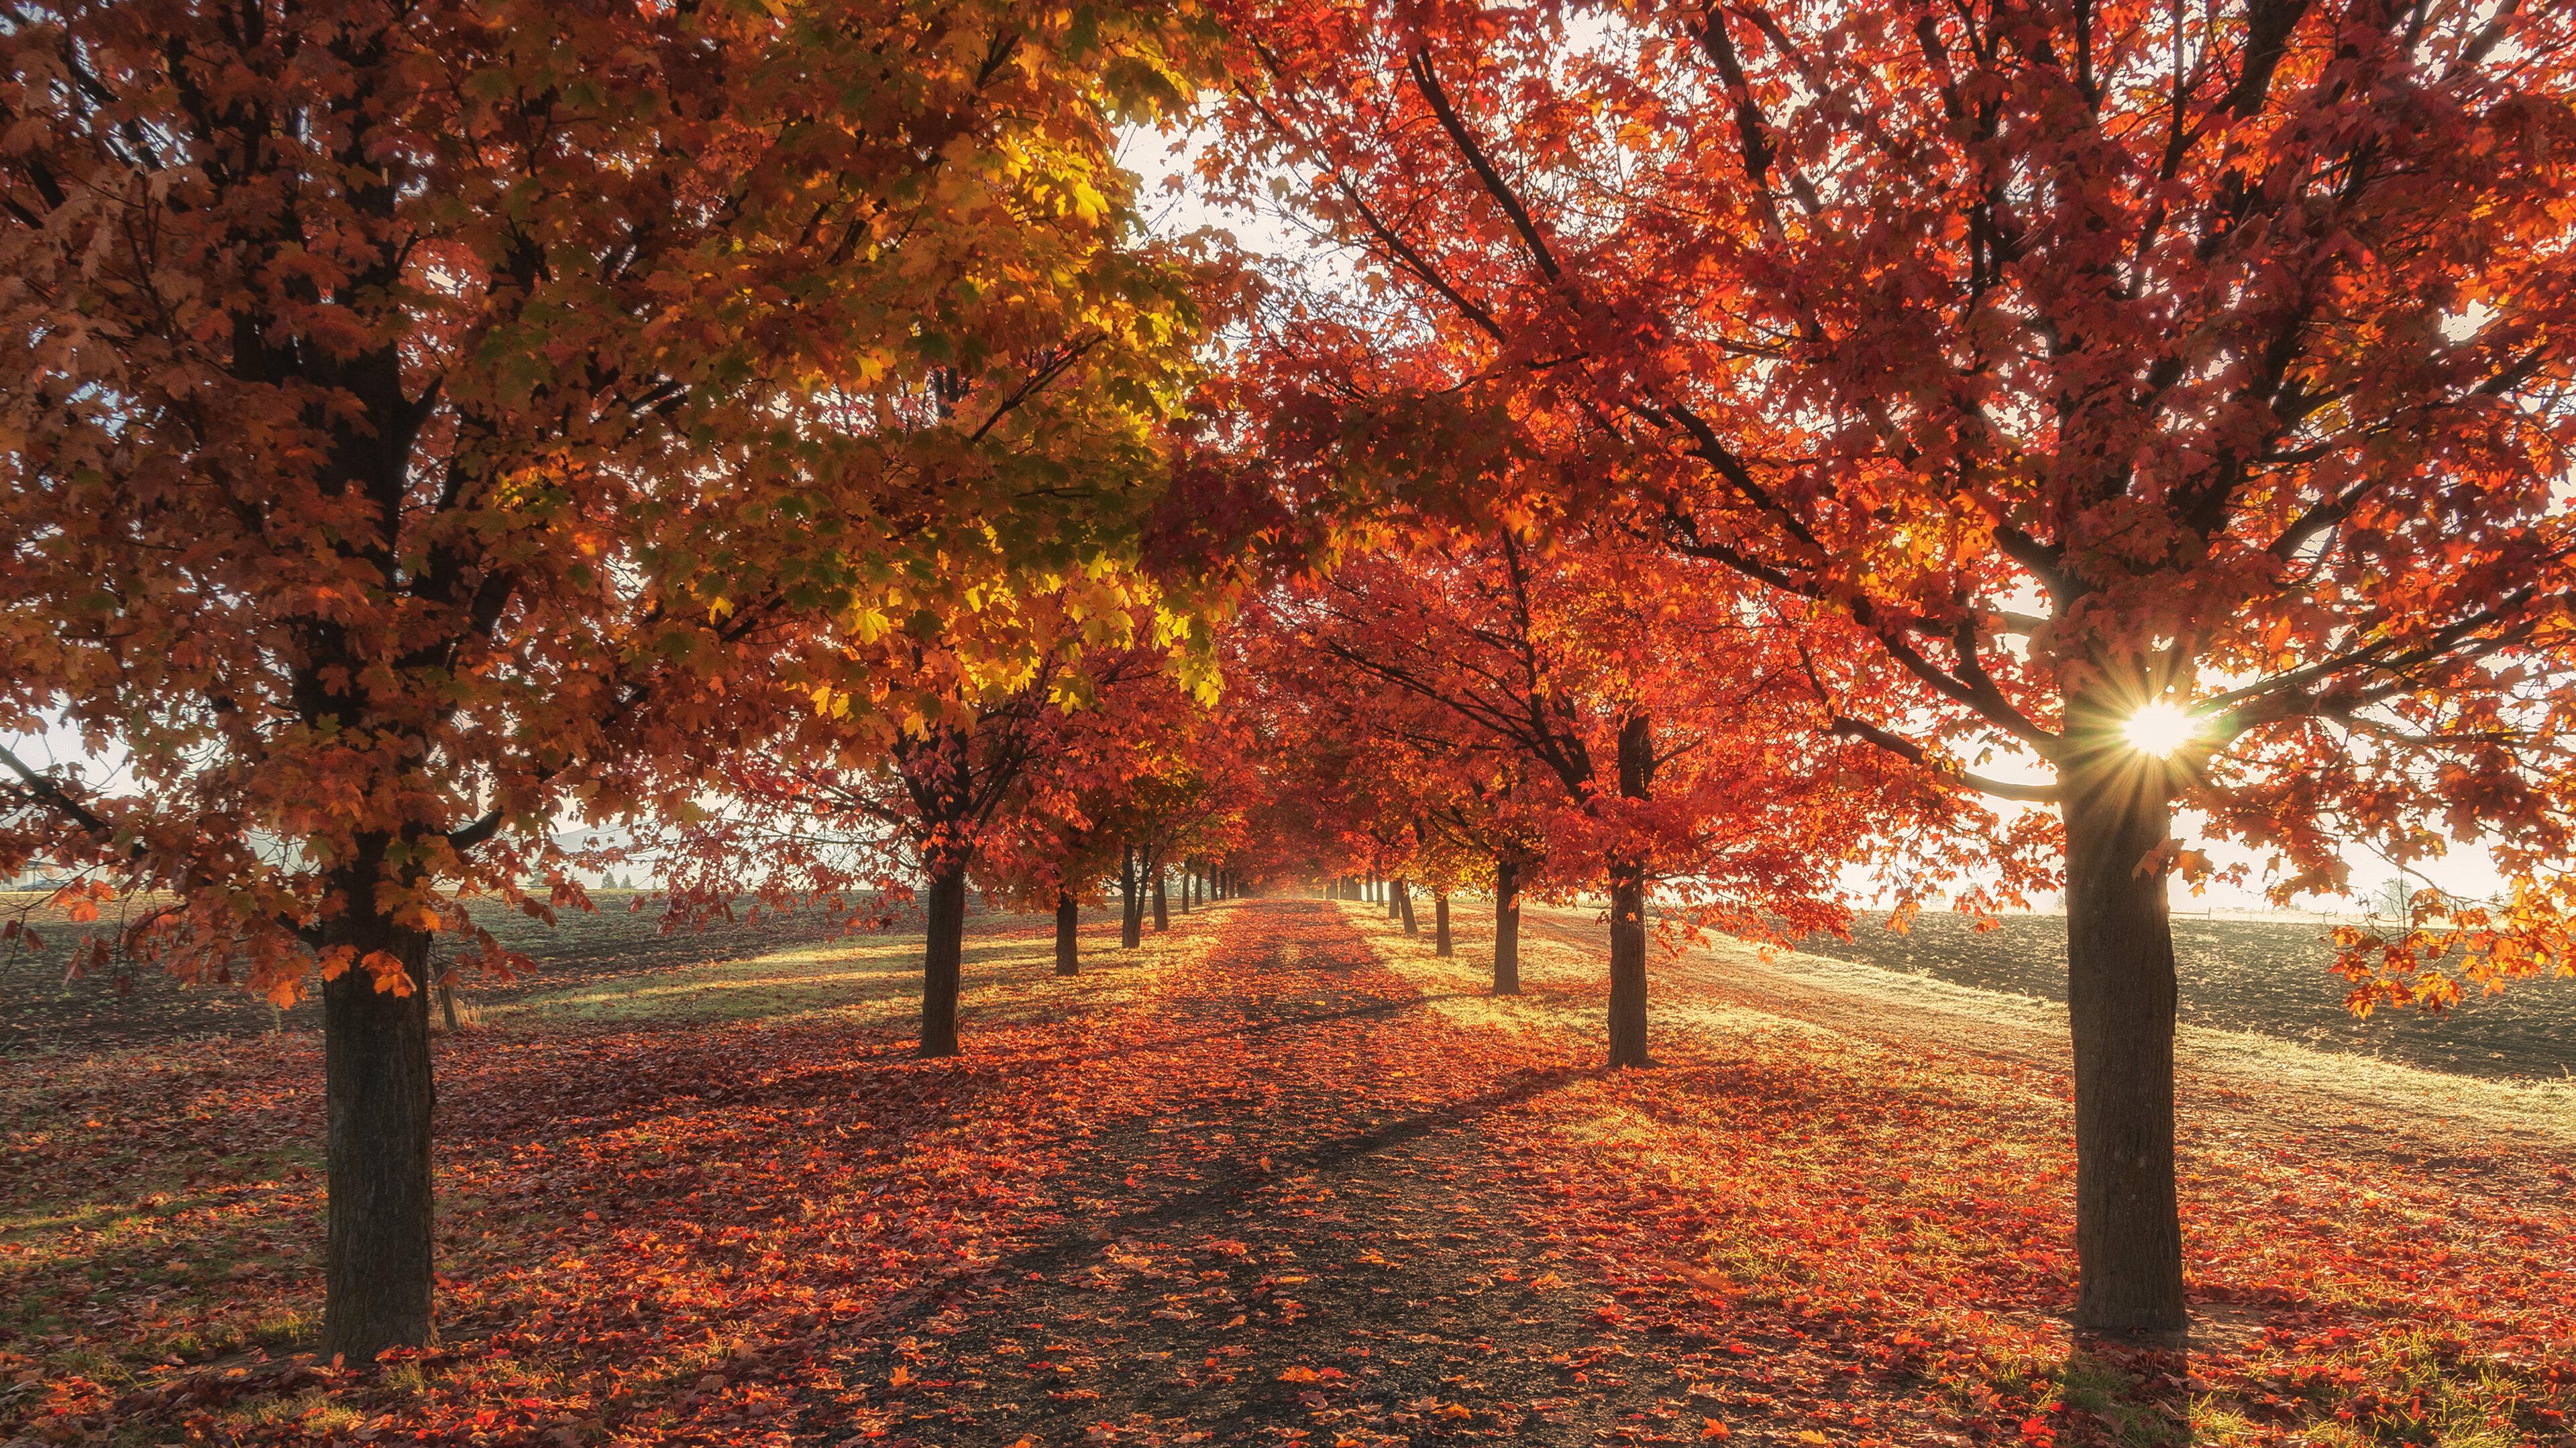 Autumn Fall Season Trees 4k HD Wallpaper Image